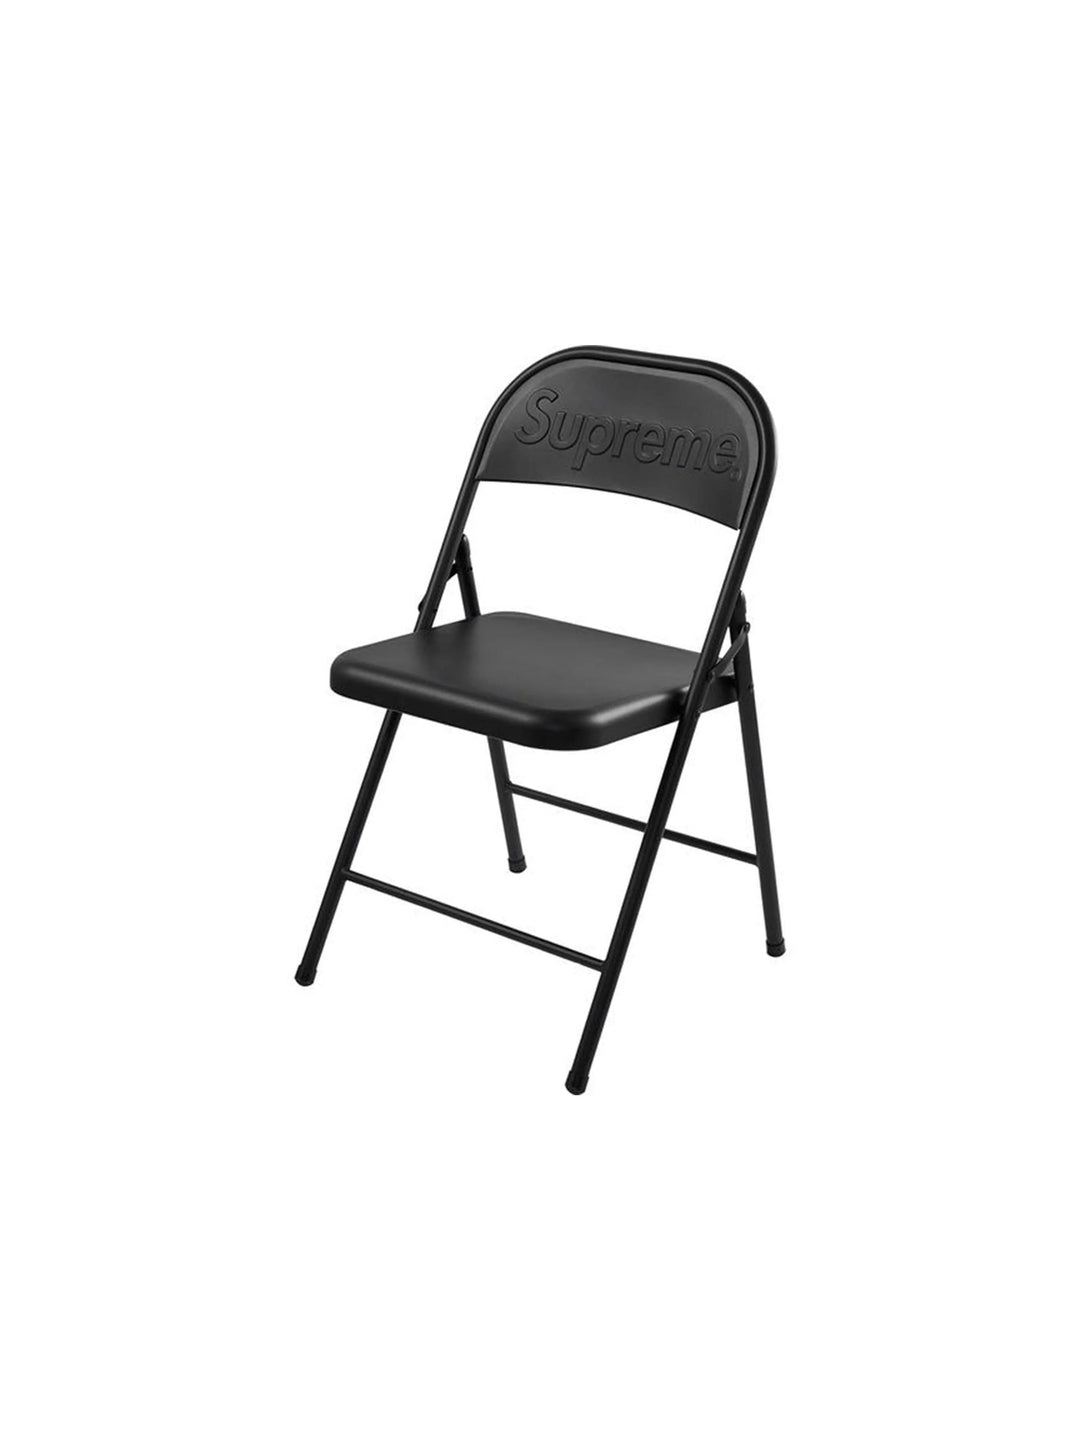 Supreme Metal Folding Chair Black Prior